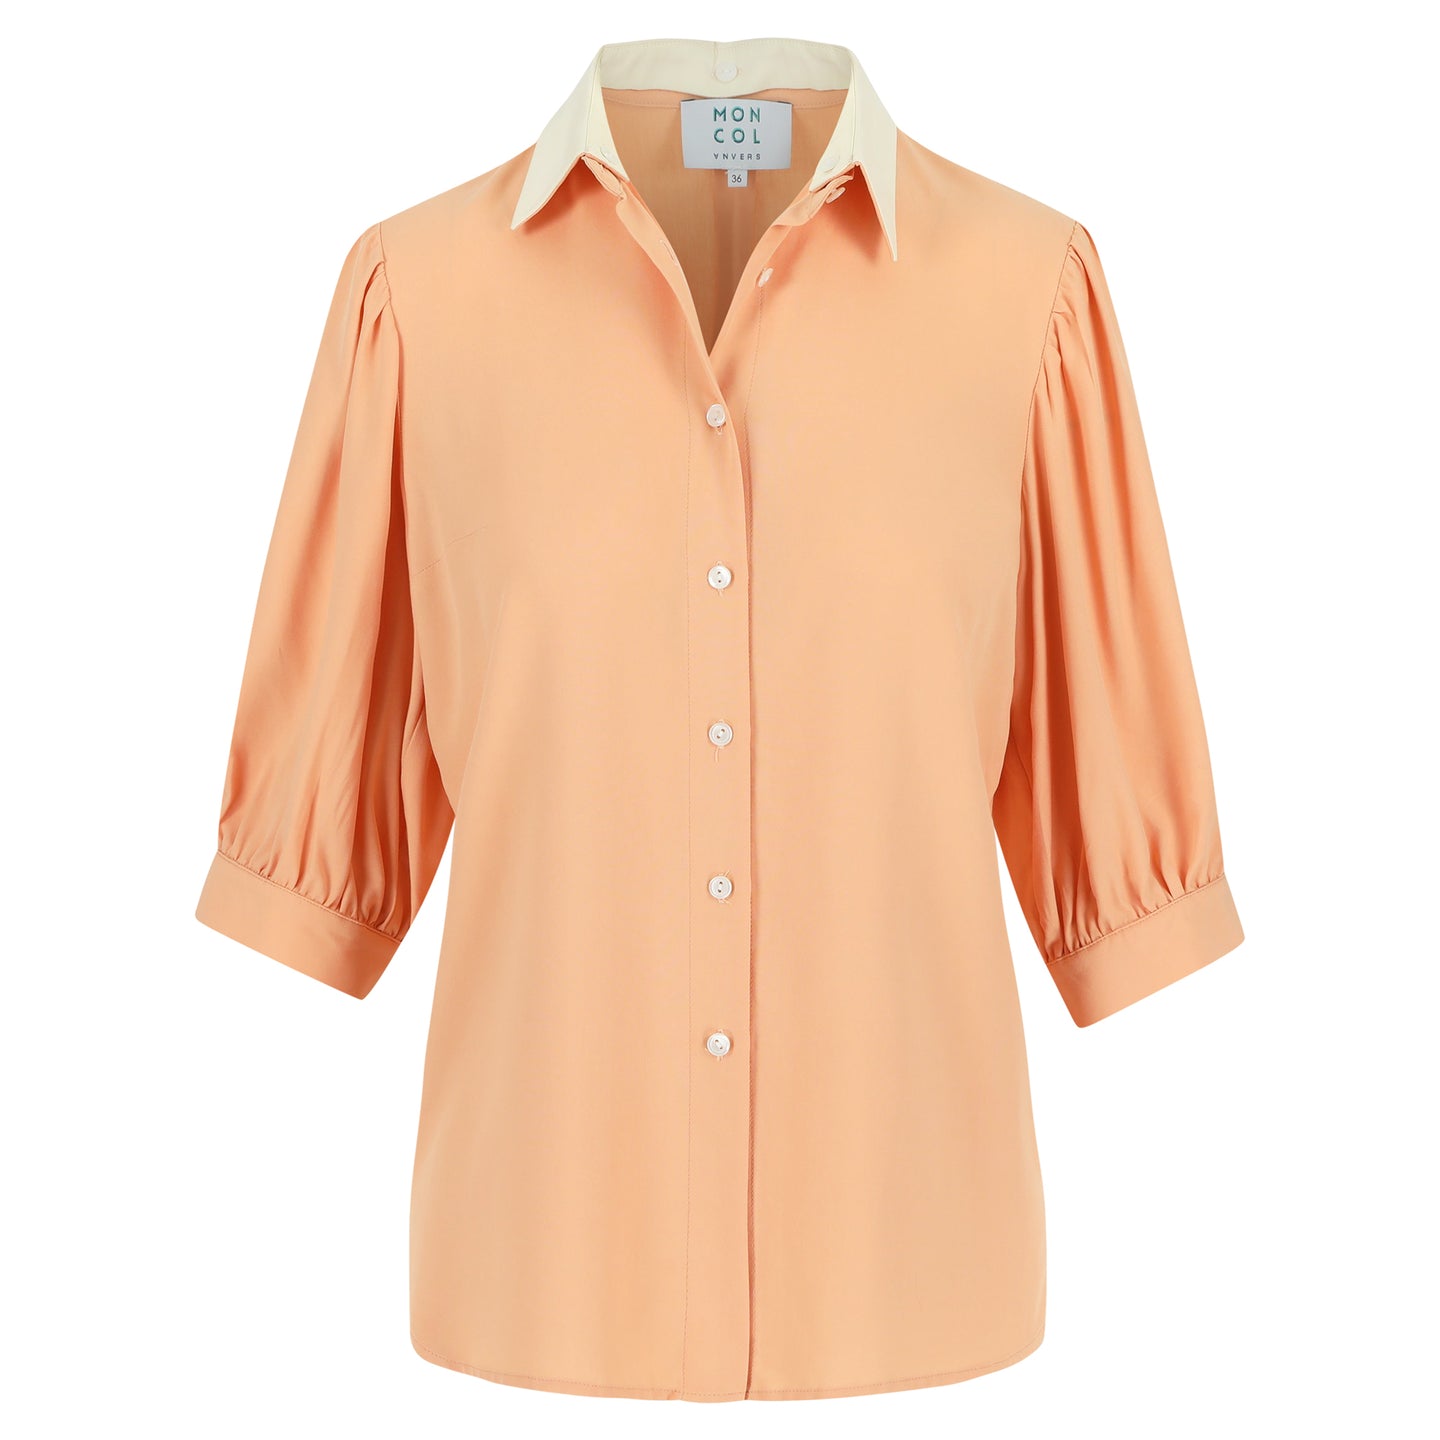 Boch blouse Papaya EcoVero - Last size: 42